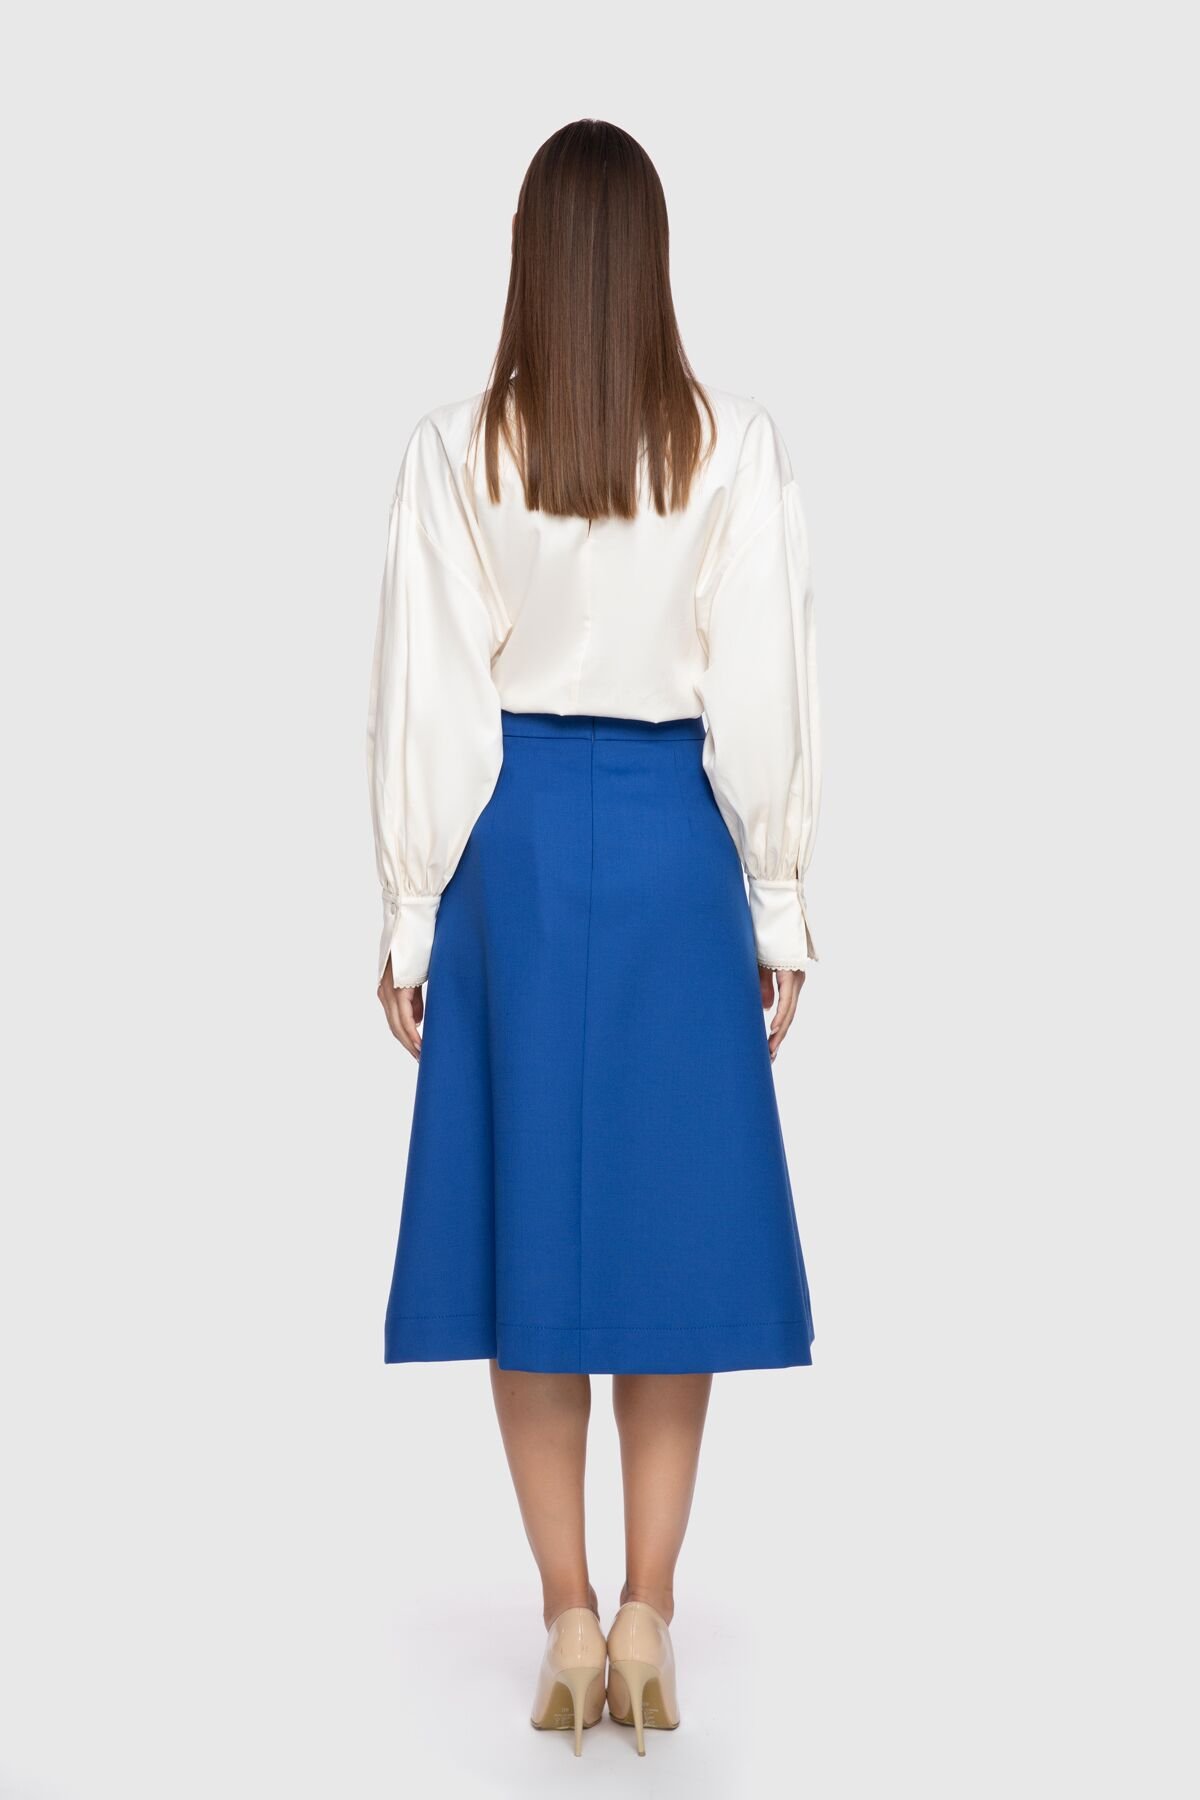 A Form Knee Length Blue Skirt